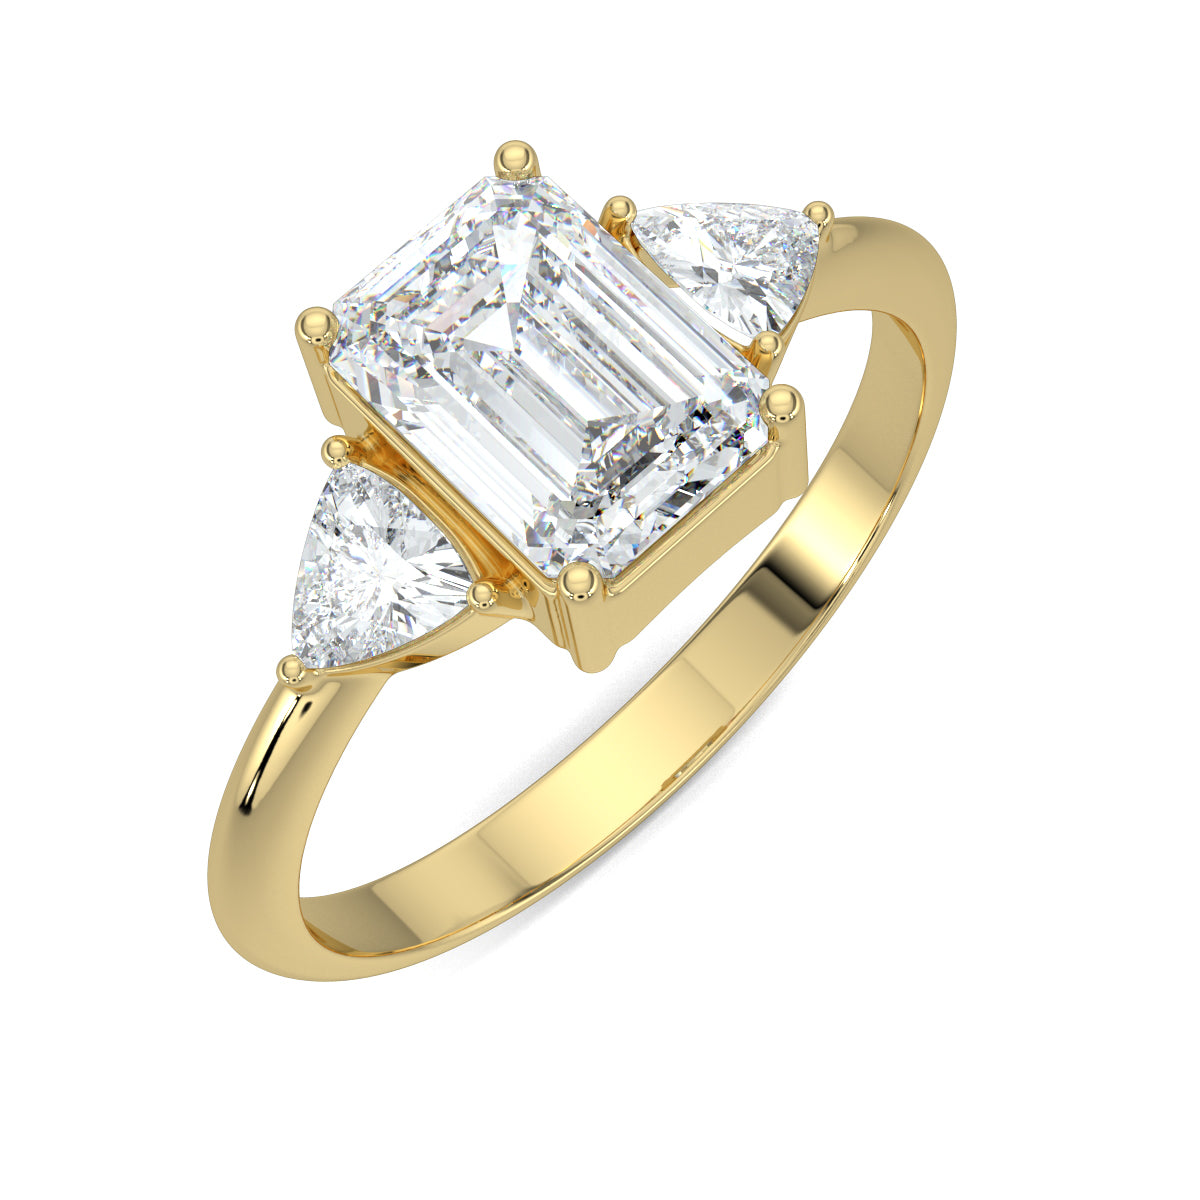 Yellow Gold, Diamond Ring, natural diamond ring, lab-grown diamond ring, Classic Emerald Trillion Ring, Emerald Shape Diamond, Trillion Cut Diamonds, Solitaire Ring, Classic Band